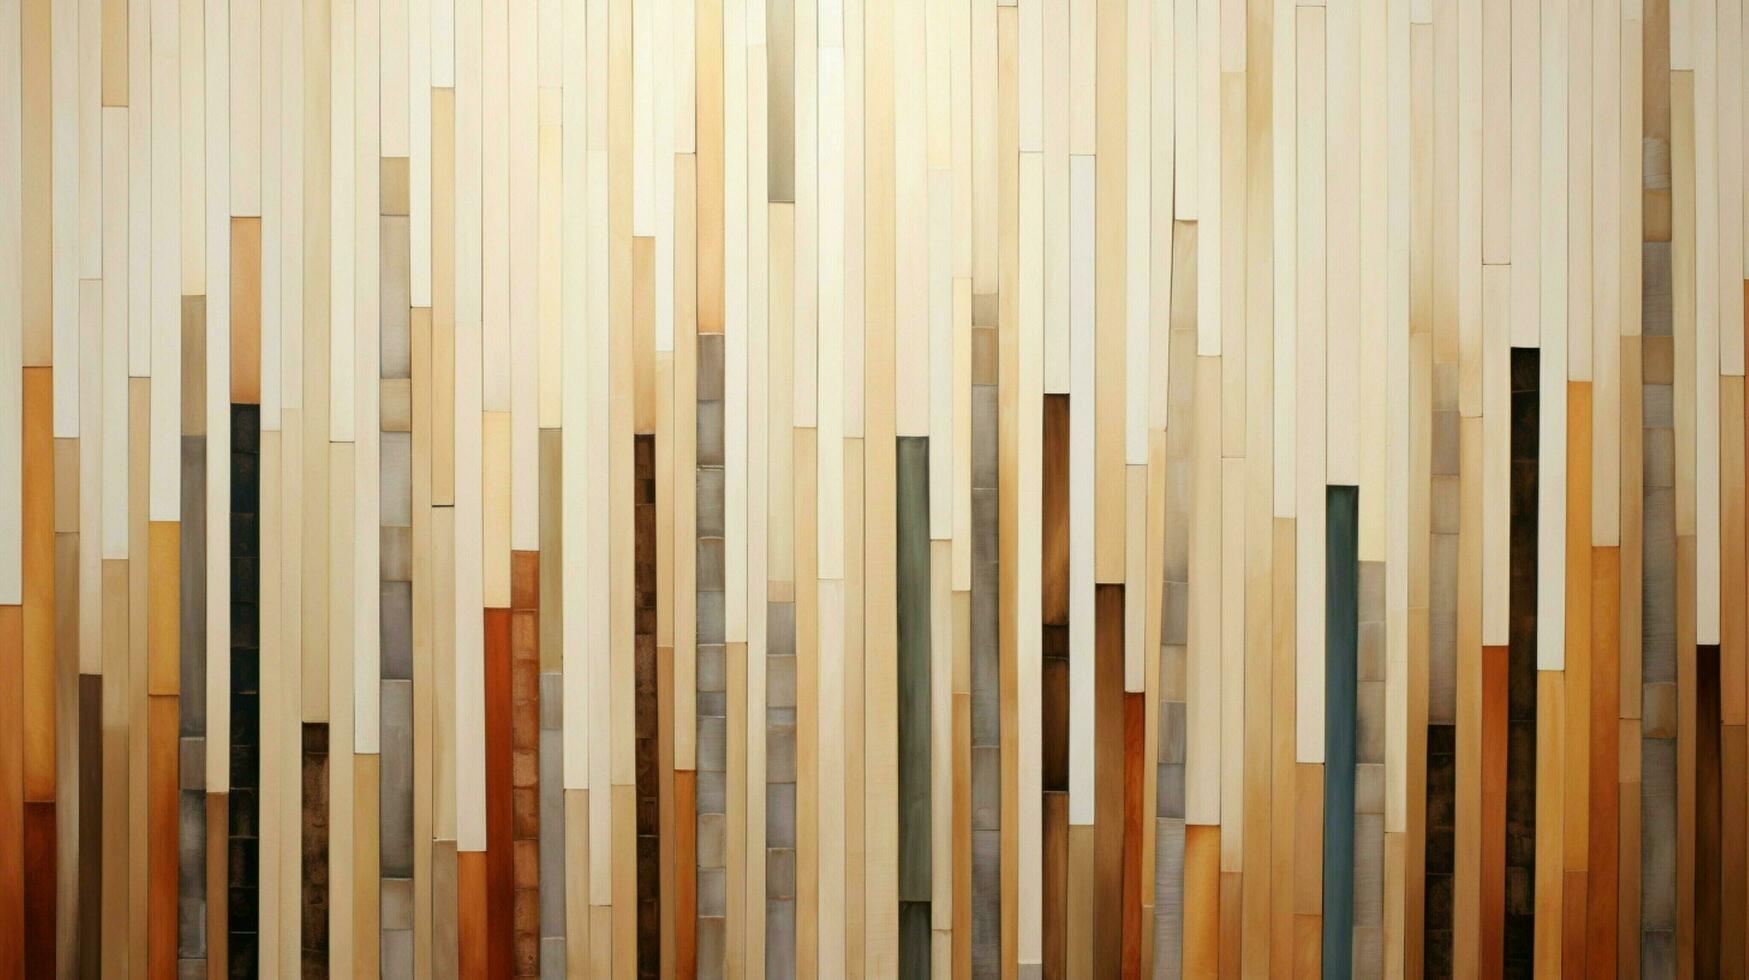 nature hardwood stripes create abstract tree backdrop photo